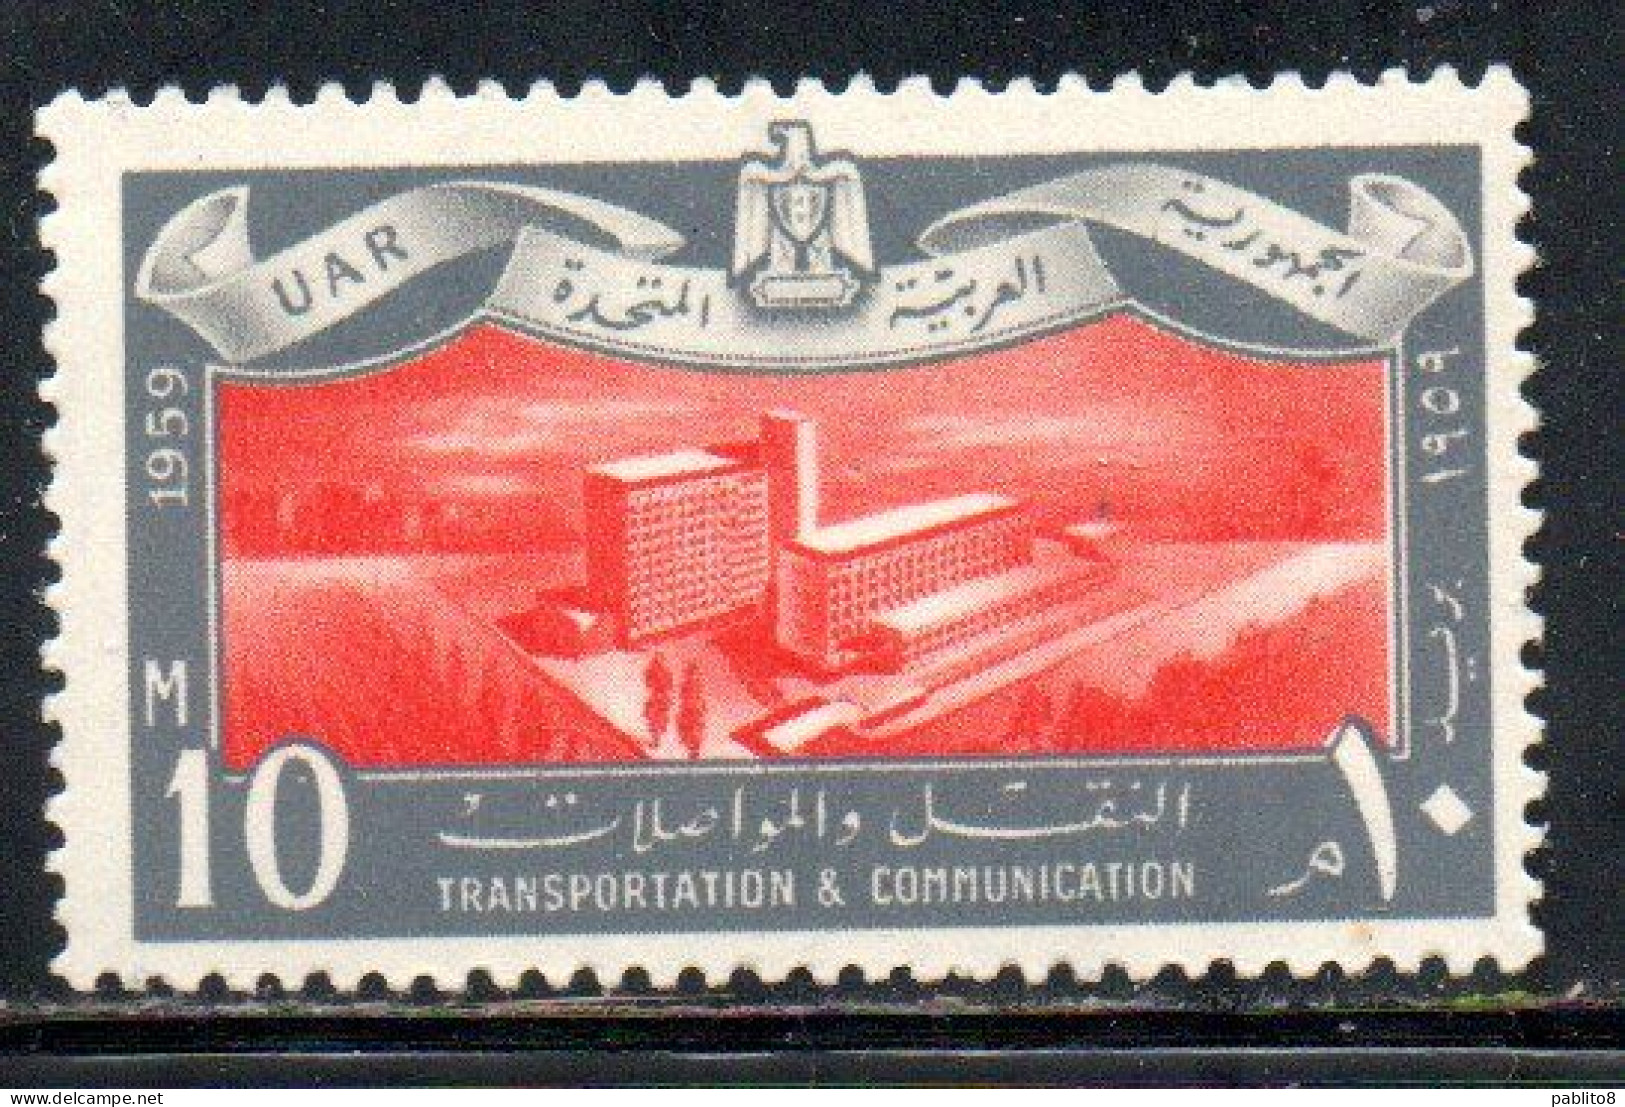 UAR EGYPT EGITTO 1959 TRANSPORTATION AND TELECOMMUNICATION STAMP PRINTING BUILDING HELIOPOLIS 10m MNH - Unused Stamps